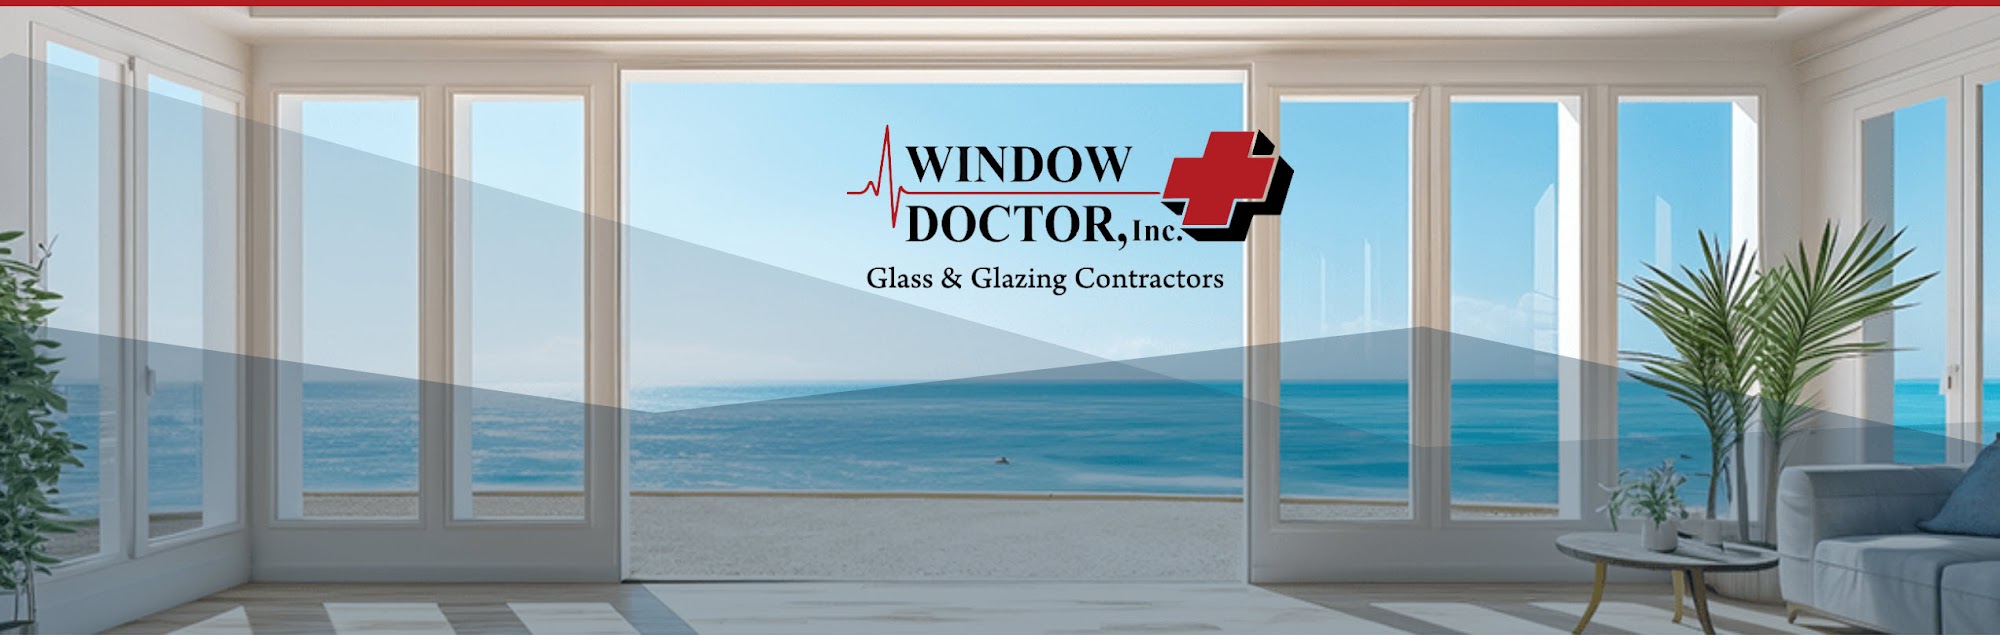 Window Doctor Inc.